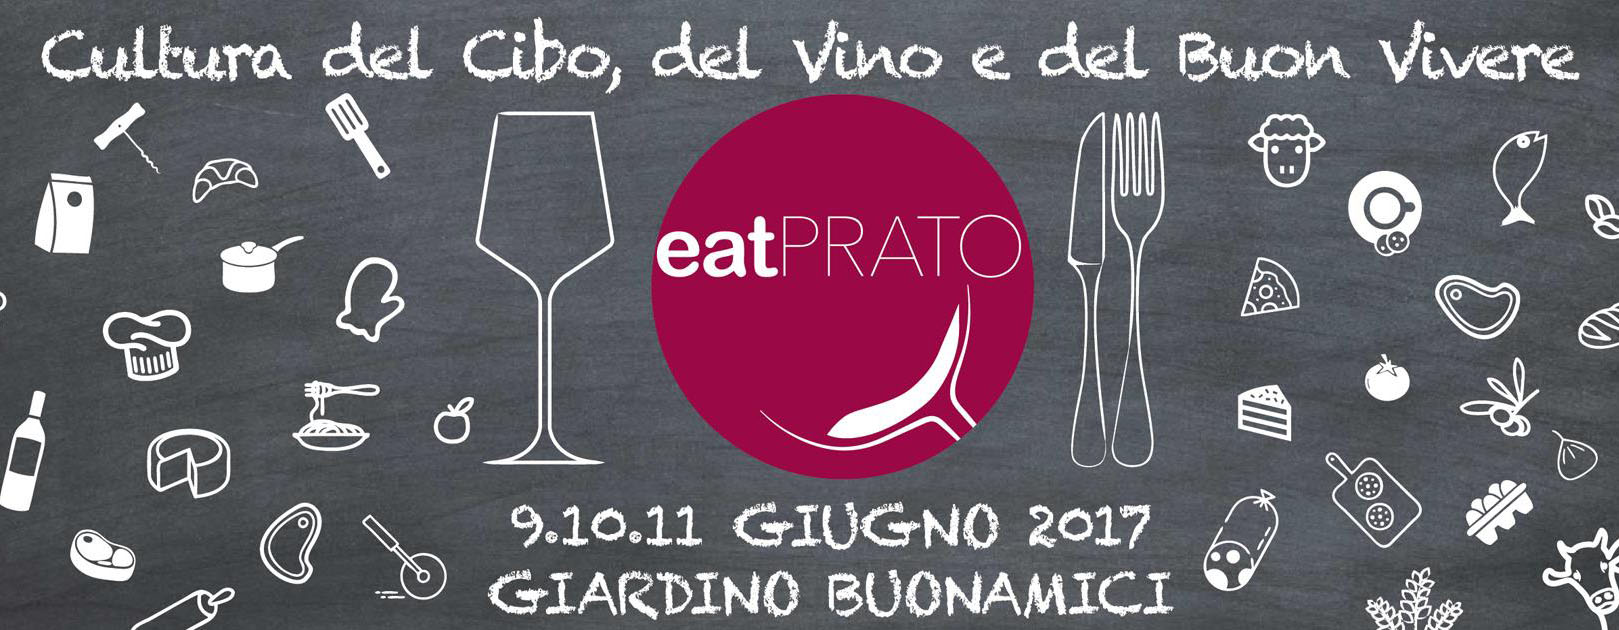 Eat Prato - 9-10-11 giugno 2017